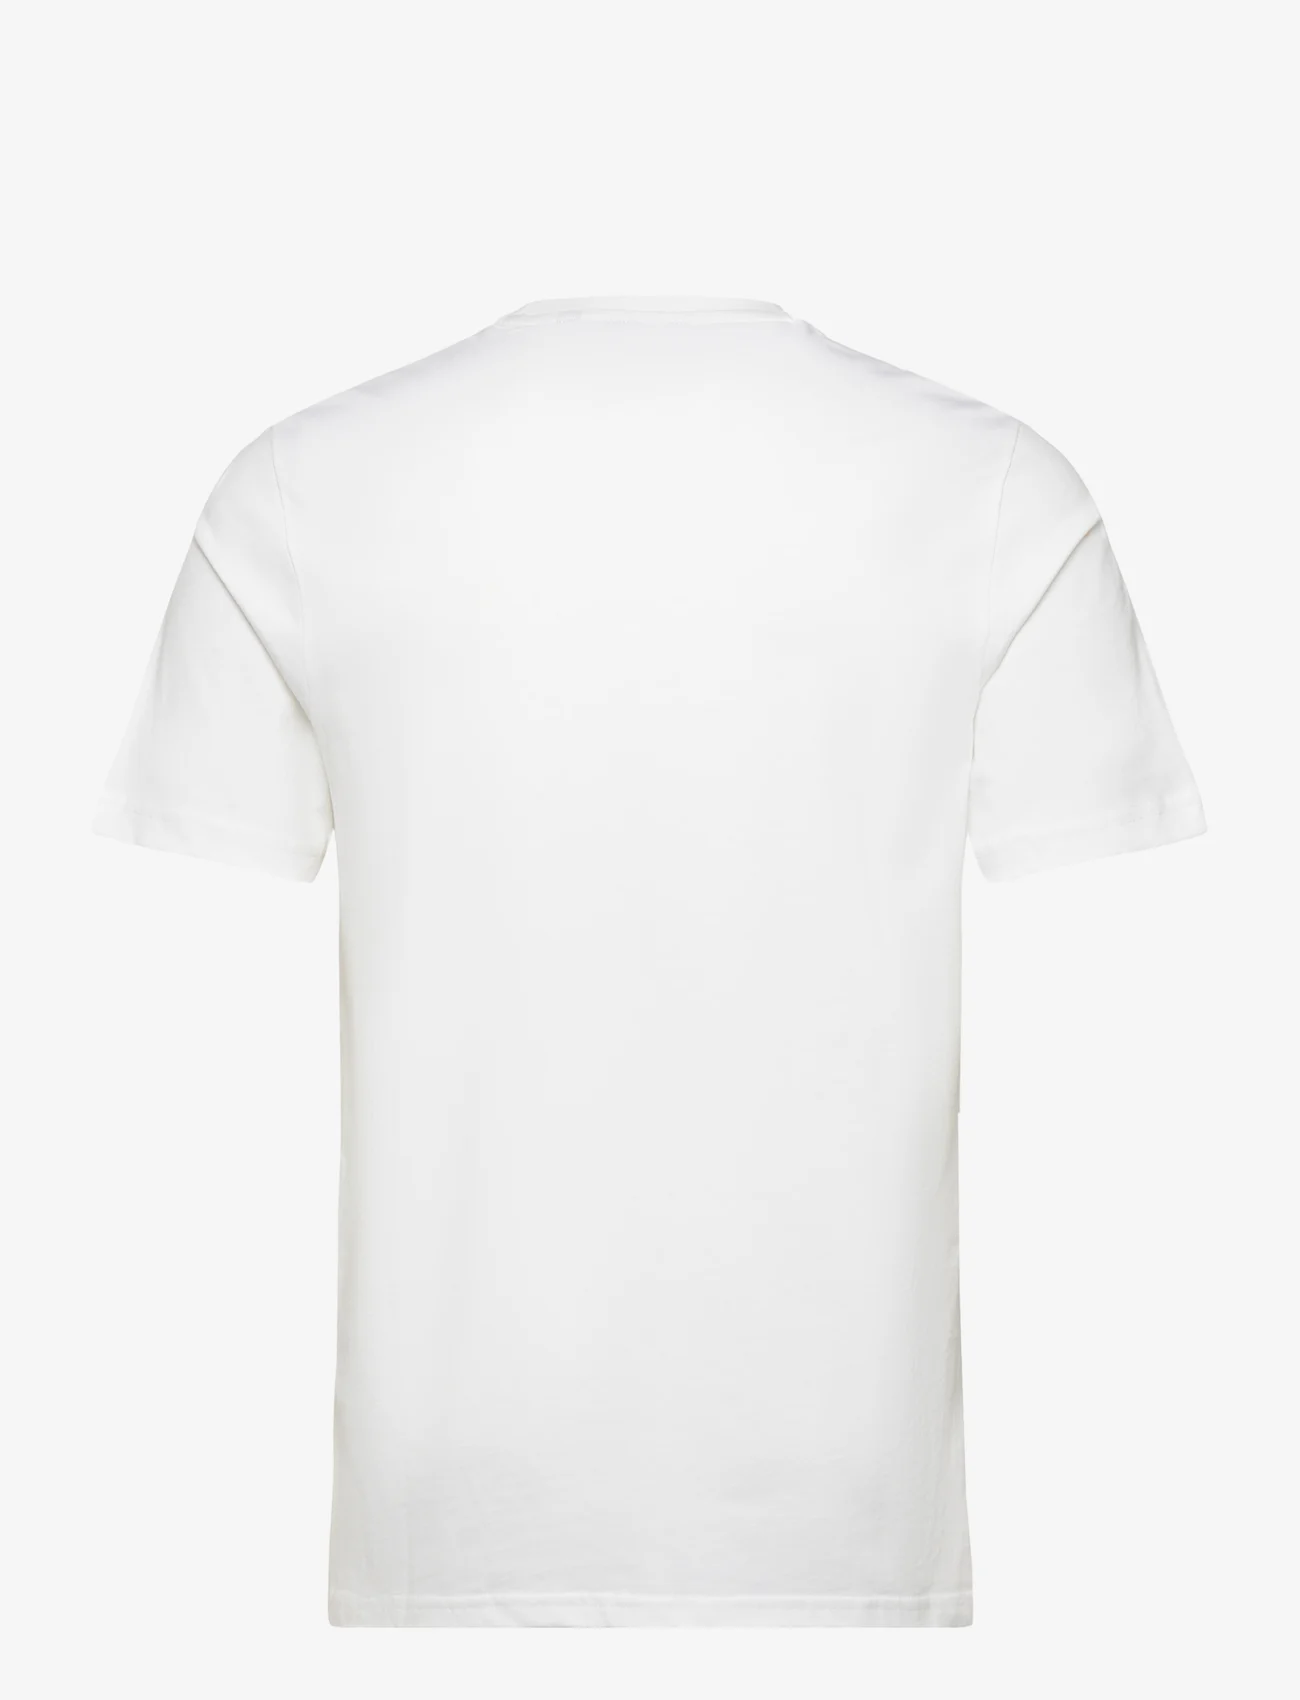 Lyle & Scott - Pocket T-Shirt - najniższe ceny - 626 white - 1